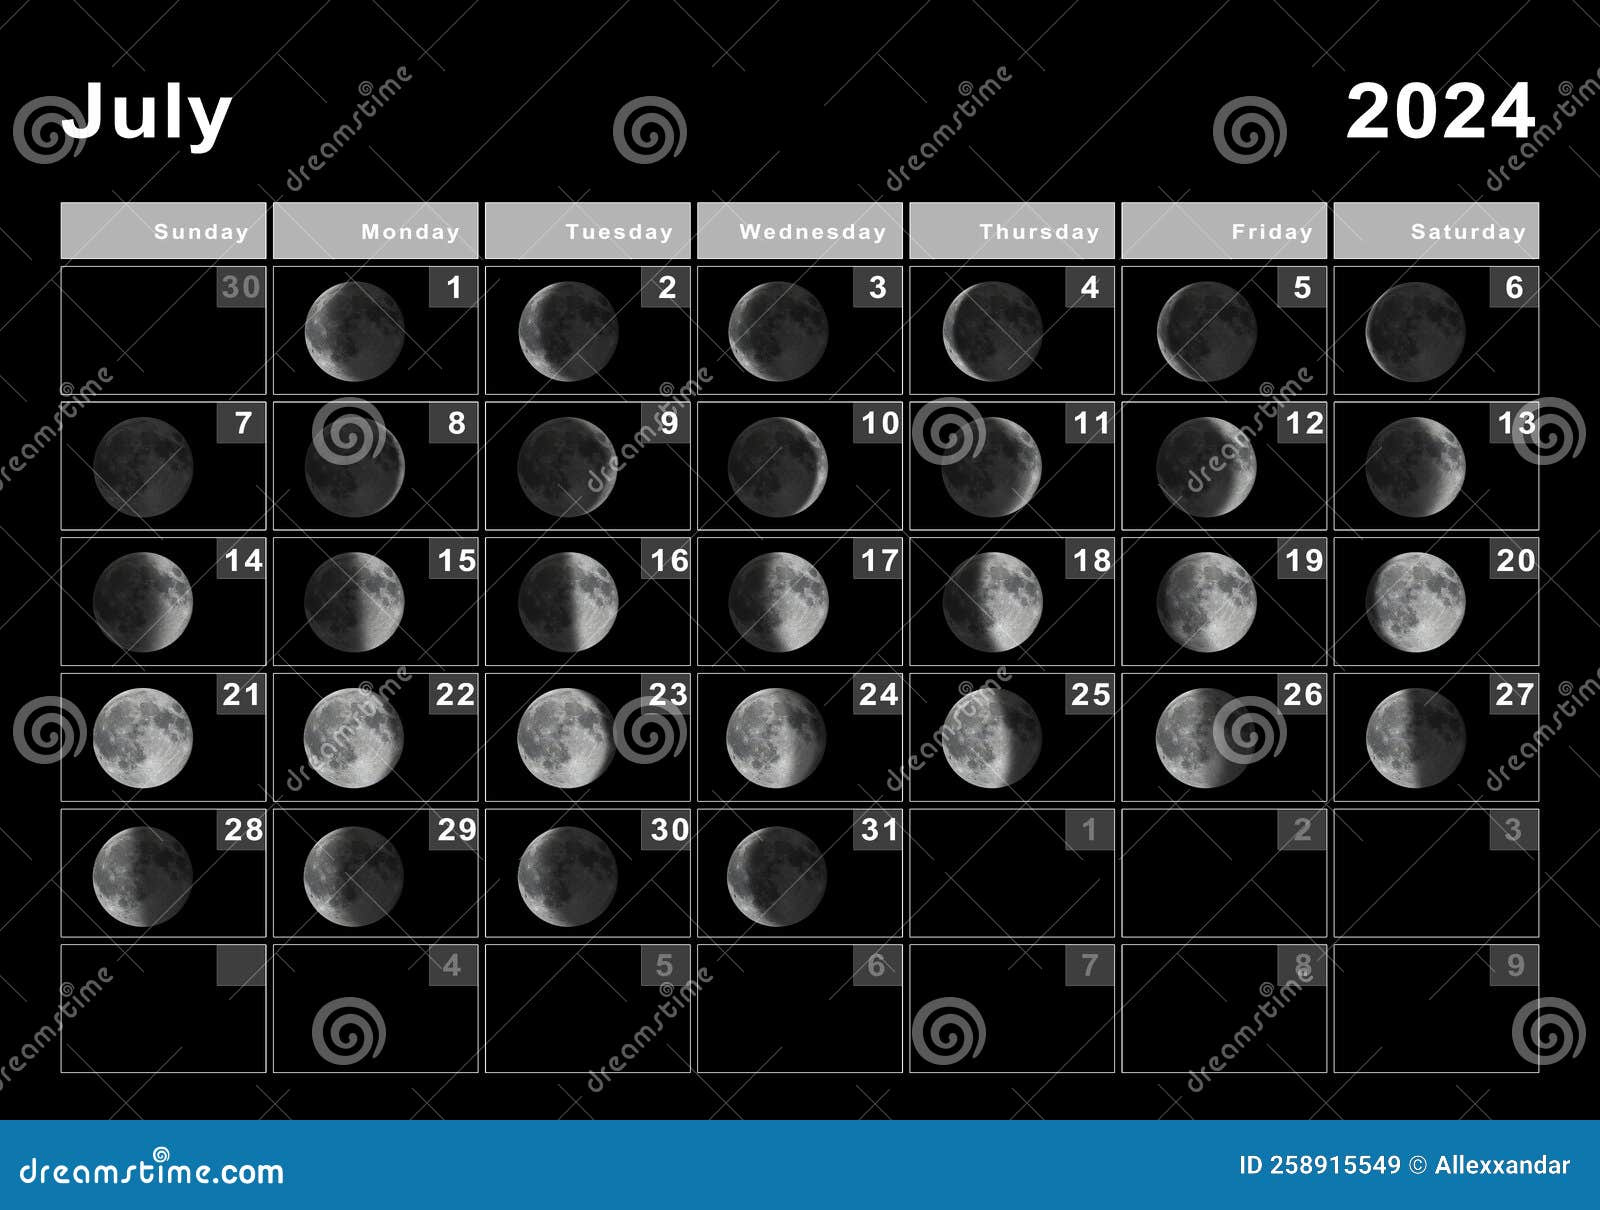 July 2024 Lunar Calendar, Moon Cycles Stock Illustration regarding Moon Calendar July 2024